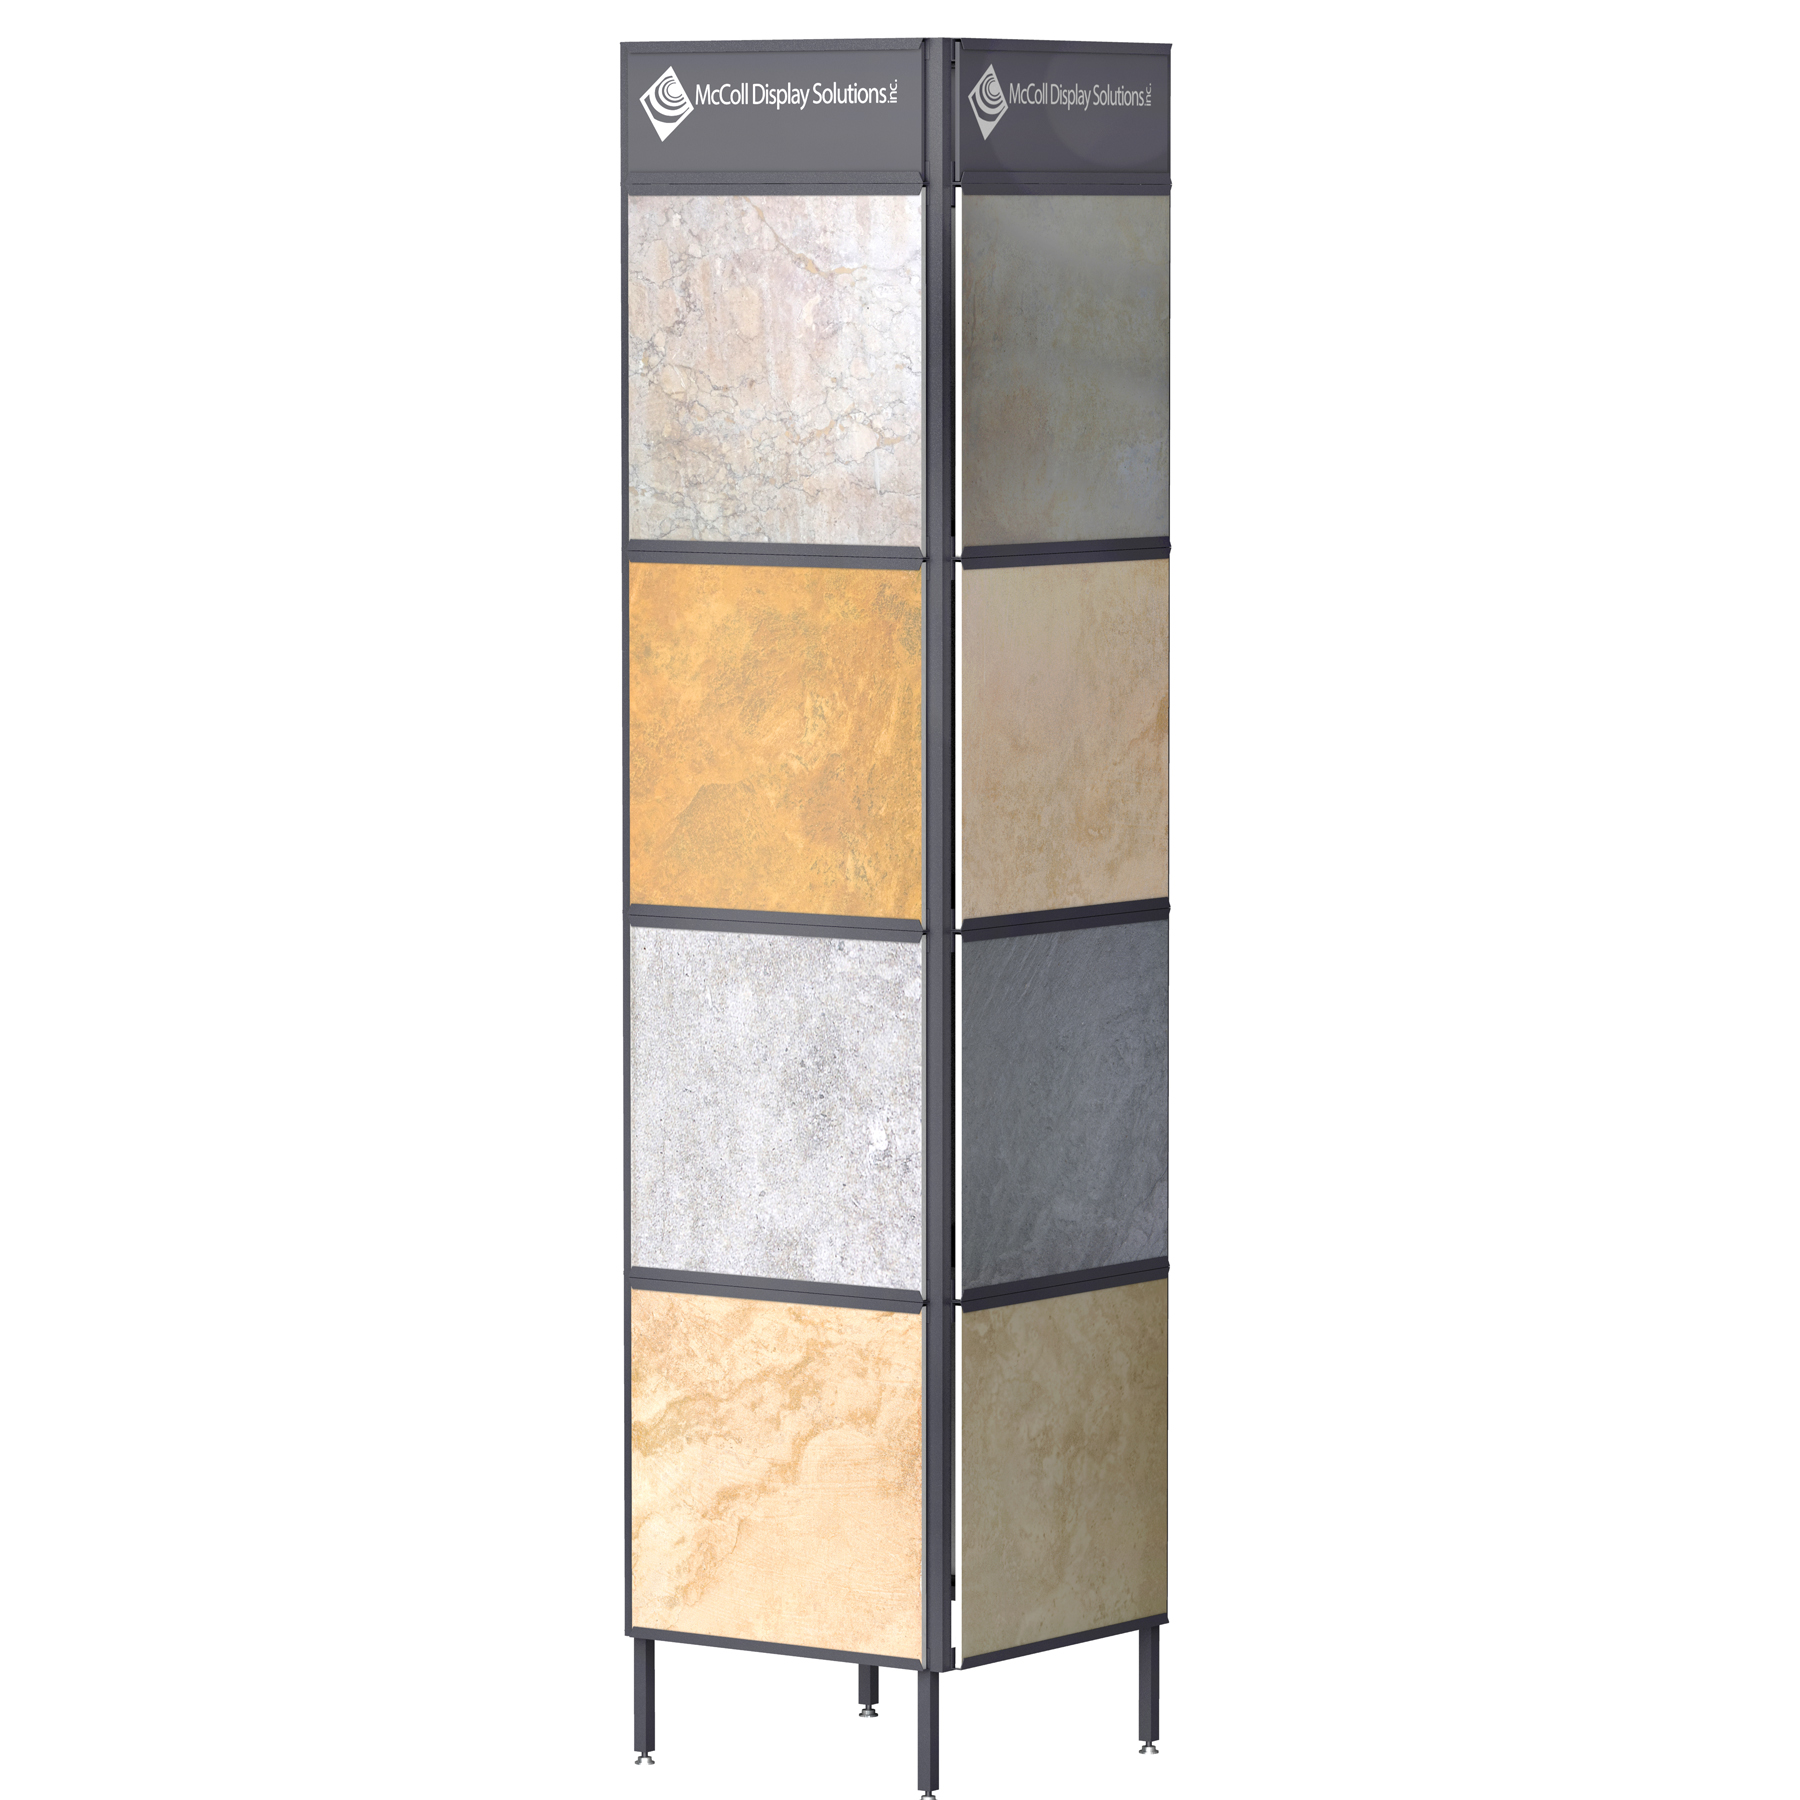 CD07 Steel Tower Square Design Ceramic Tile Stone Quartz Composite Travertine Marble System Showroom Displays McColl Display